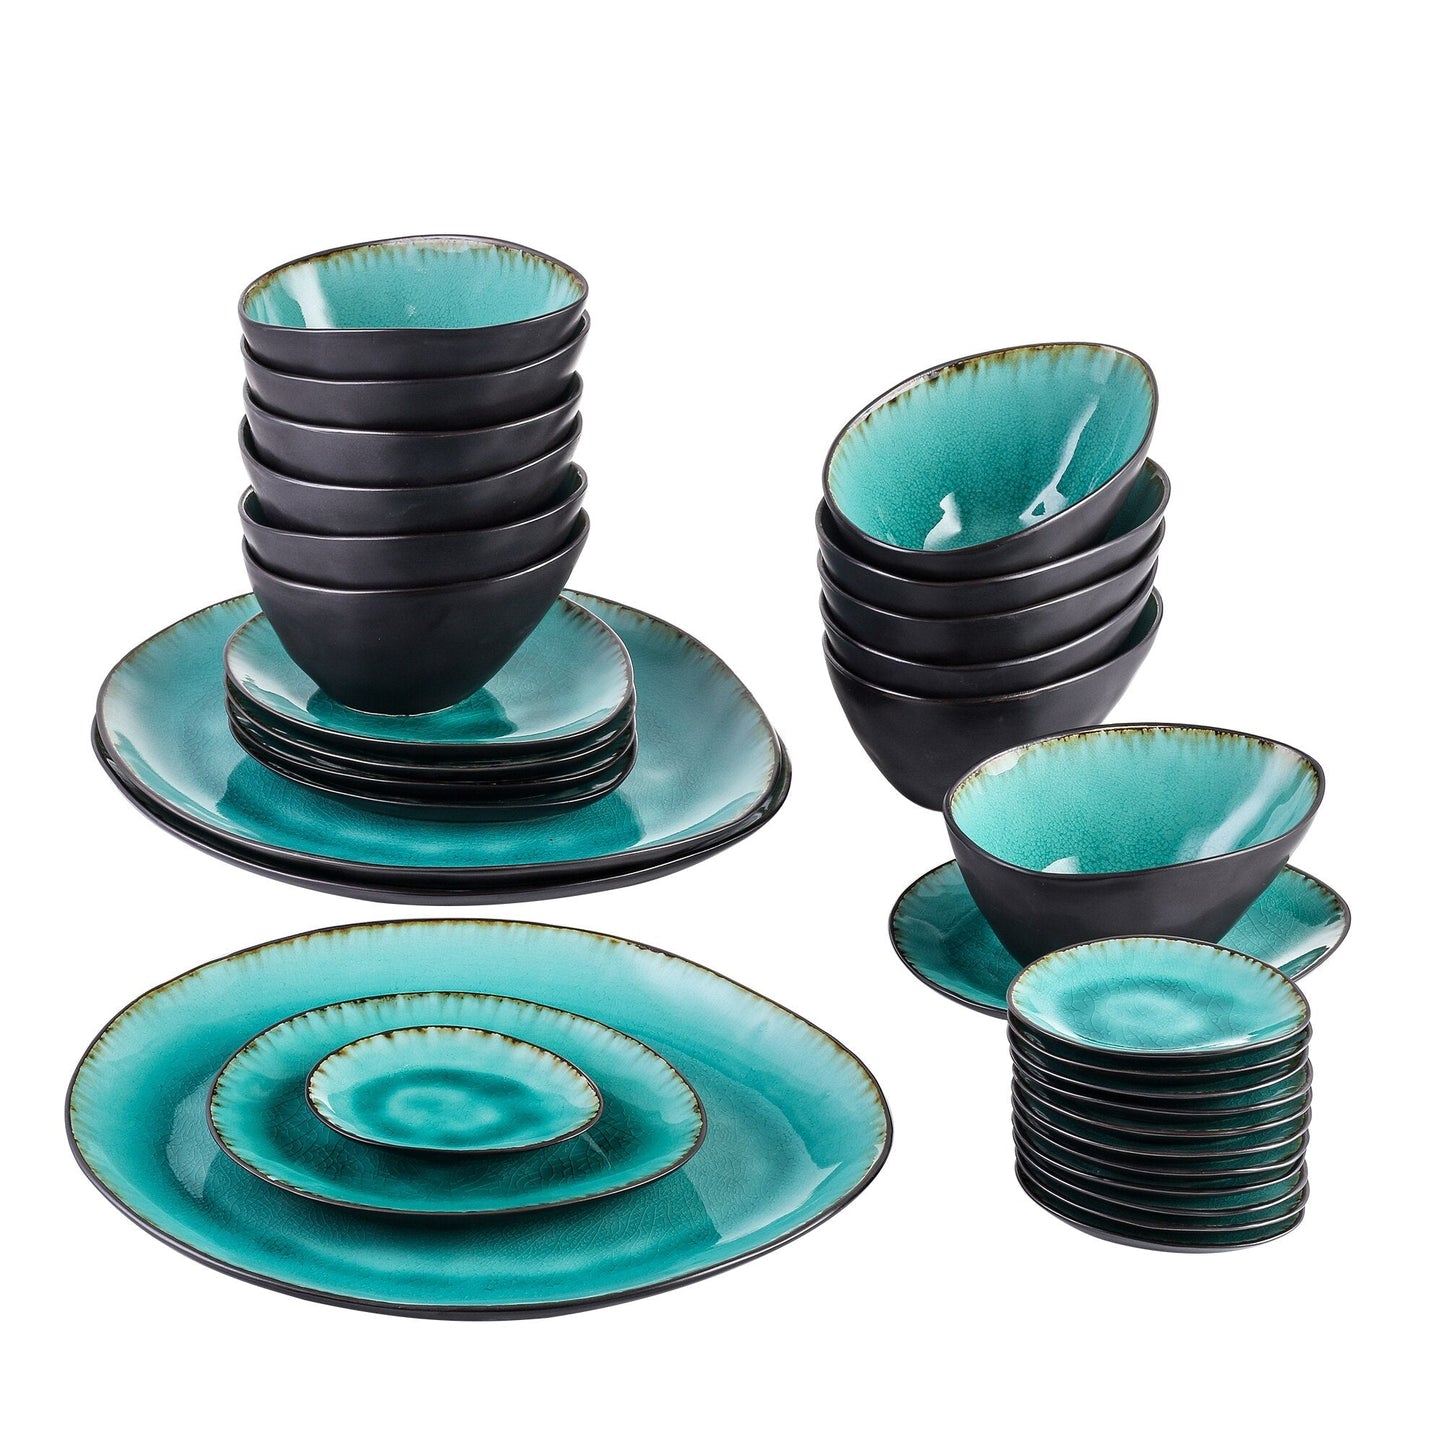 Bonita 33-Piece Pottery Stoneware Vintage Ceramic Dinner Set - Nordic Side - 12, 33, Aqua, Ceramic, Dessert, Dinner, Dipping, DishesBowl, Piece, Plate, Pottery, Set, Stoneware, VANCASSO, Vint